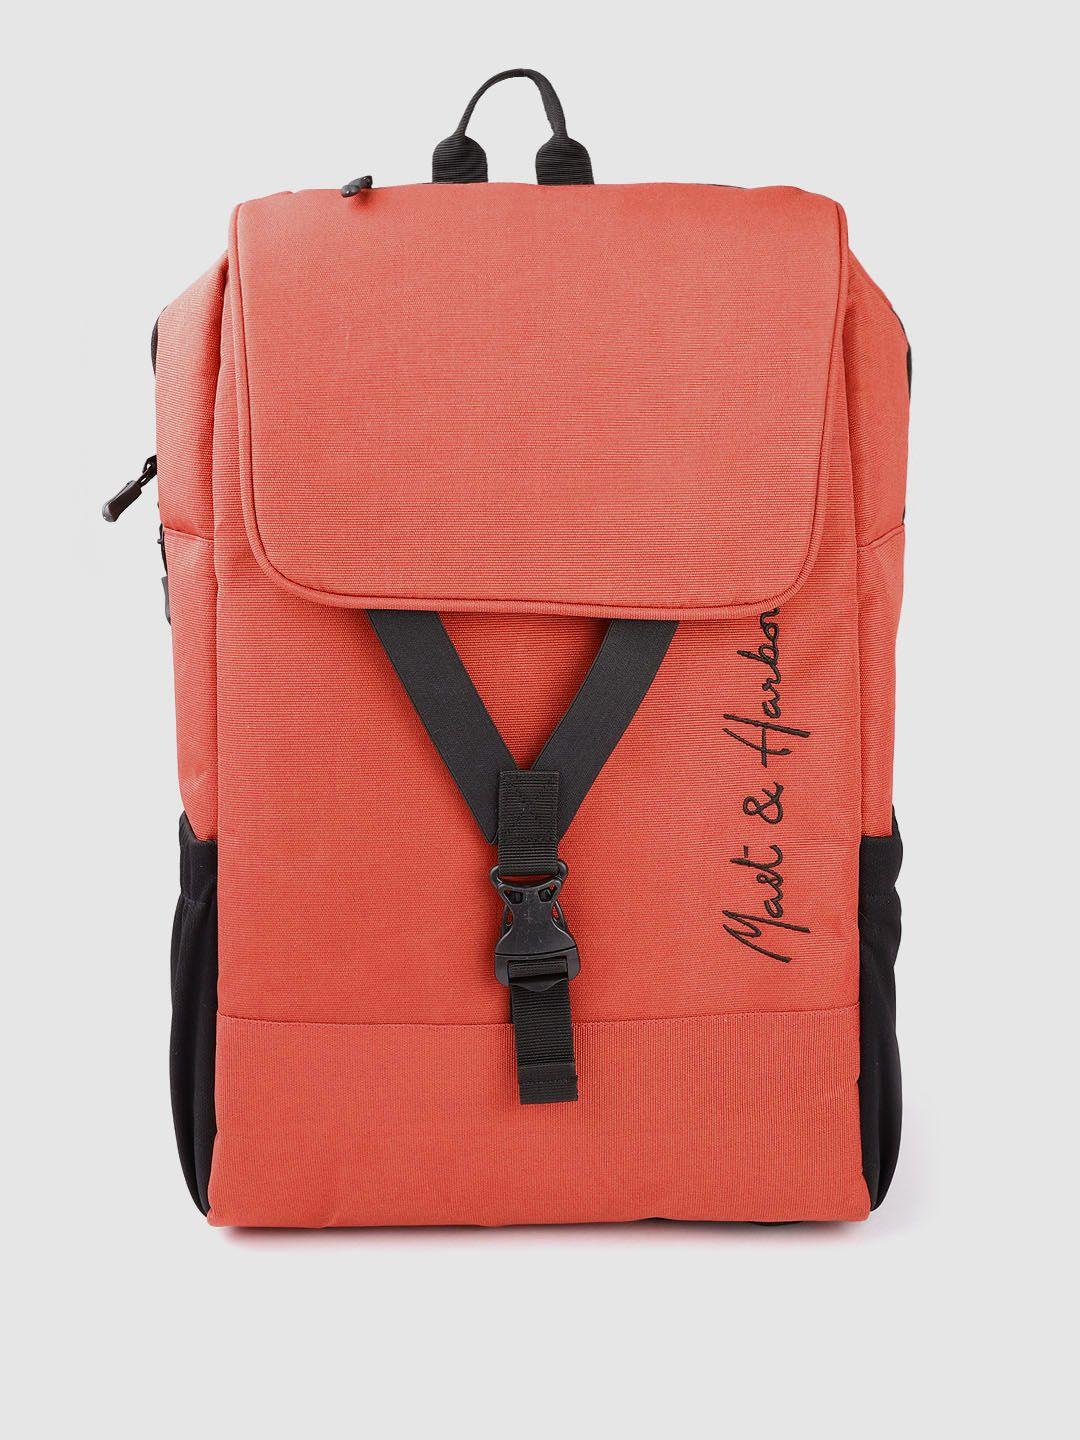 mast & harbour unisex rust orange solid backpack 21.1 l